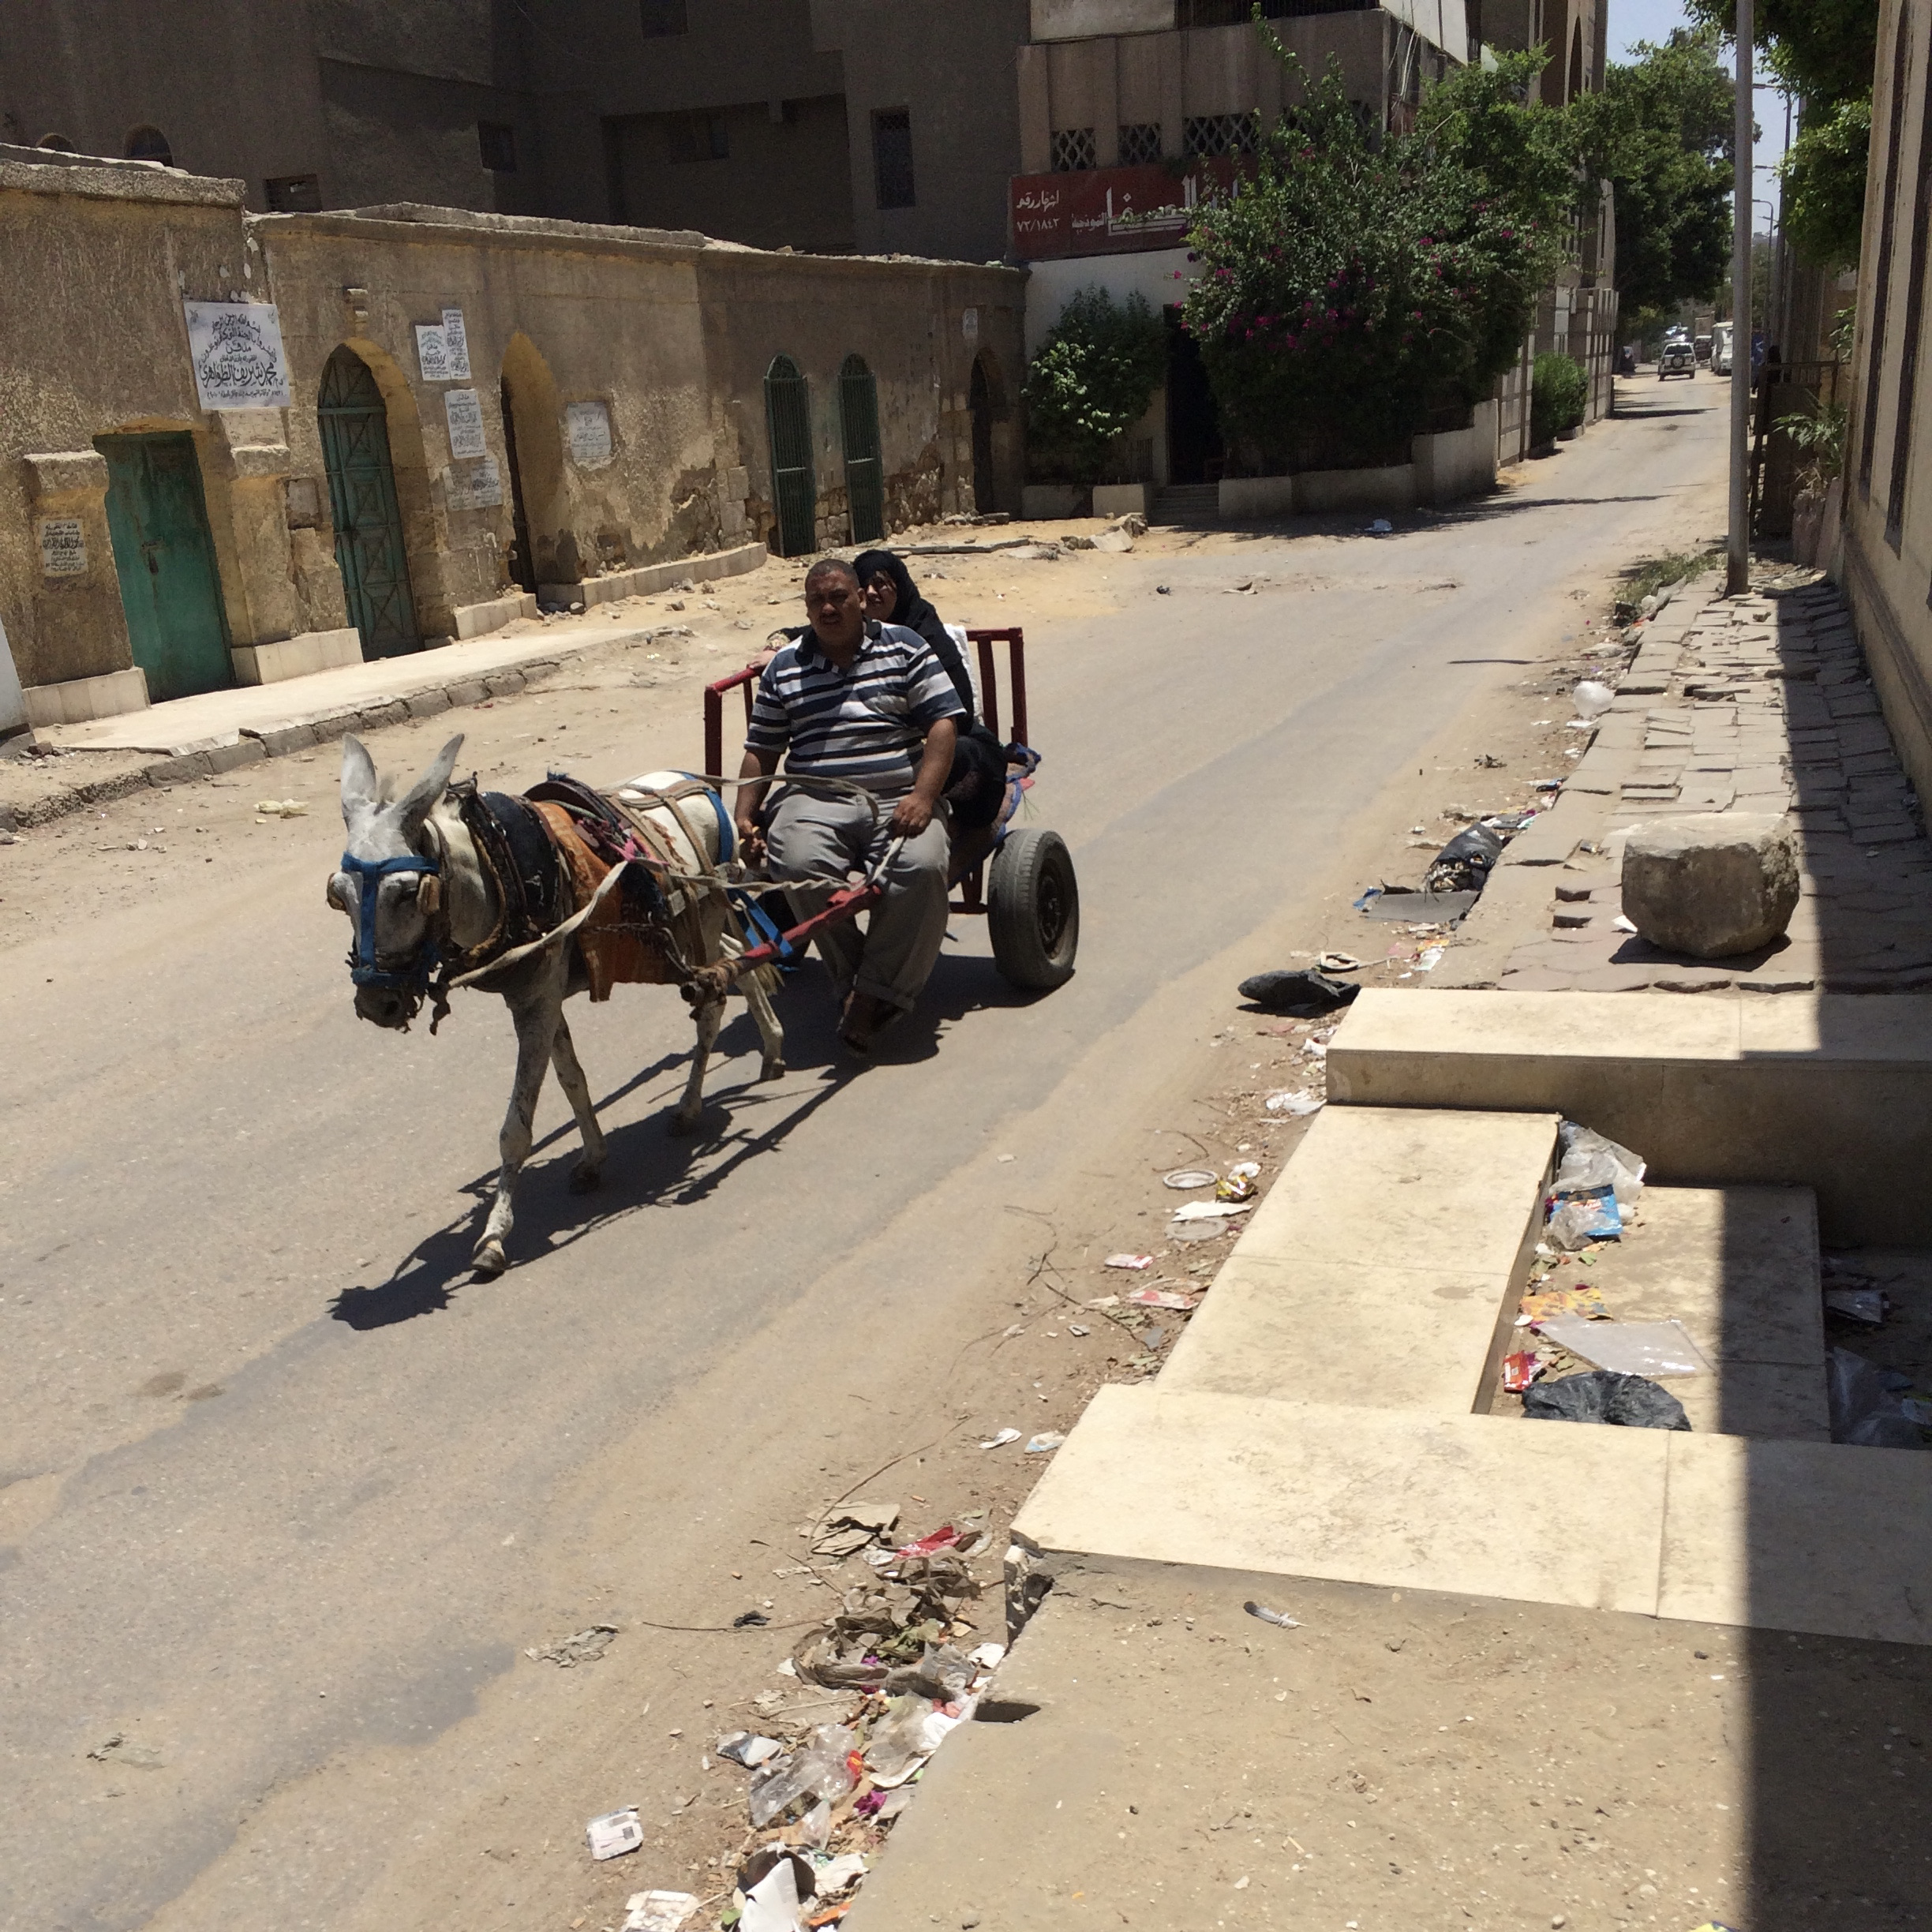 Zielig ezeltje in Stad der Doden Cairo Egypte